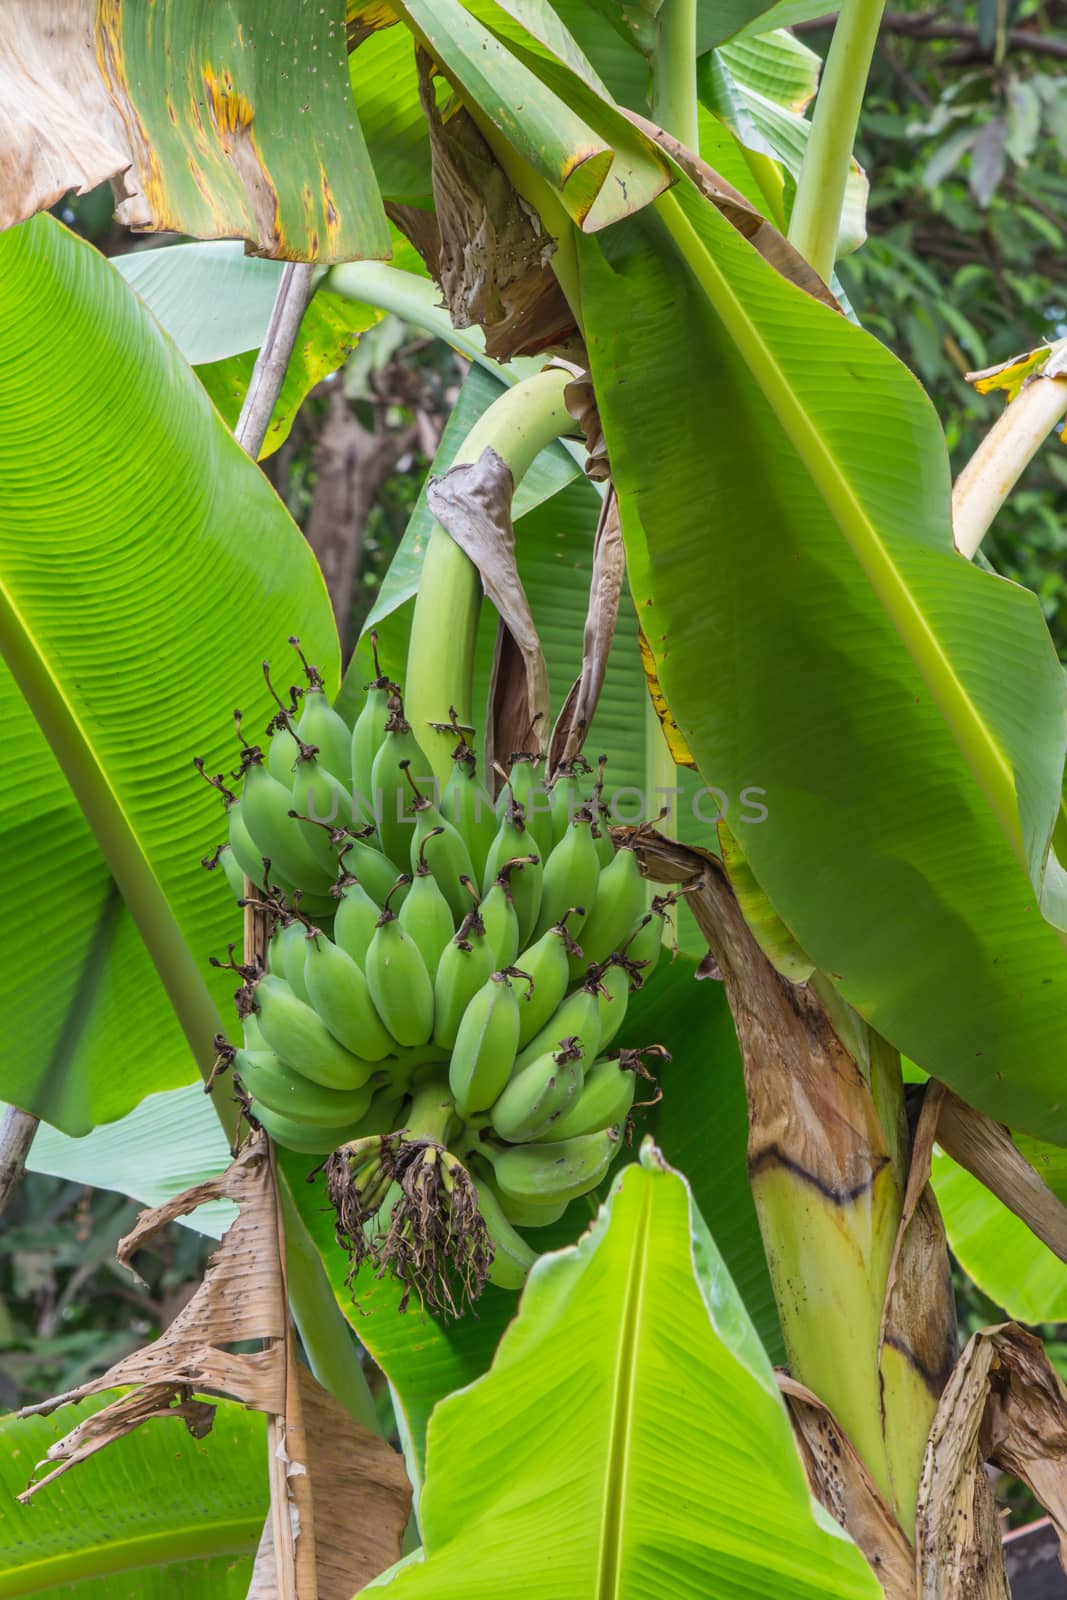 A Banana tree with a bunch of green bananas